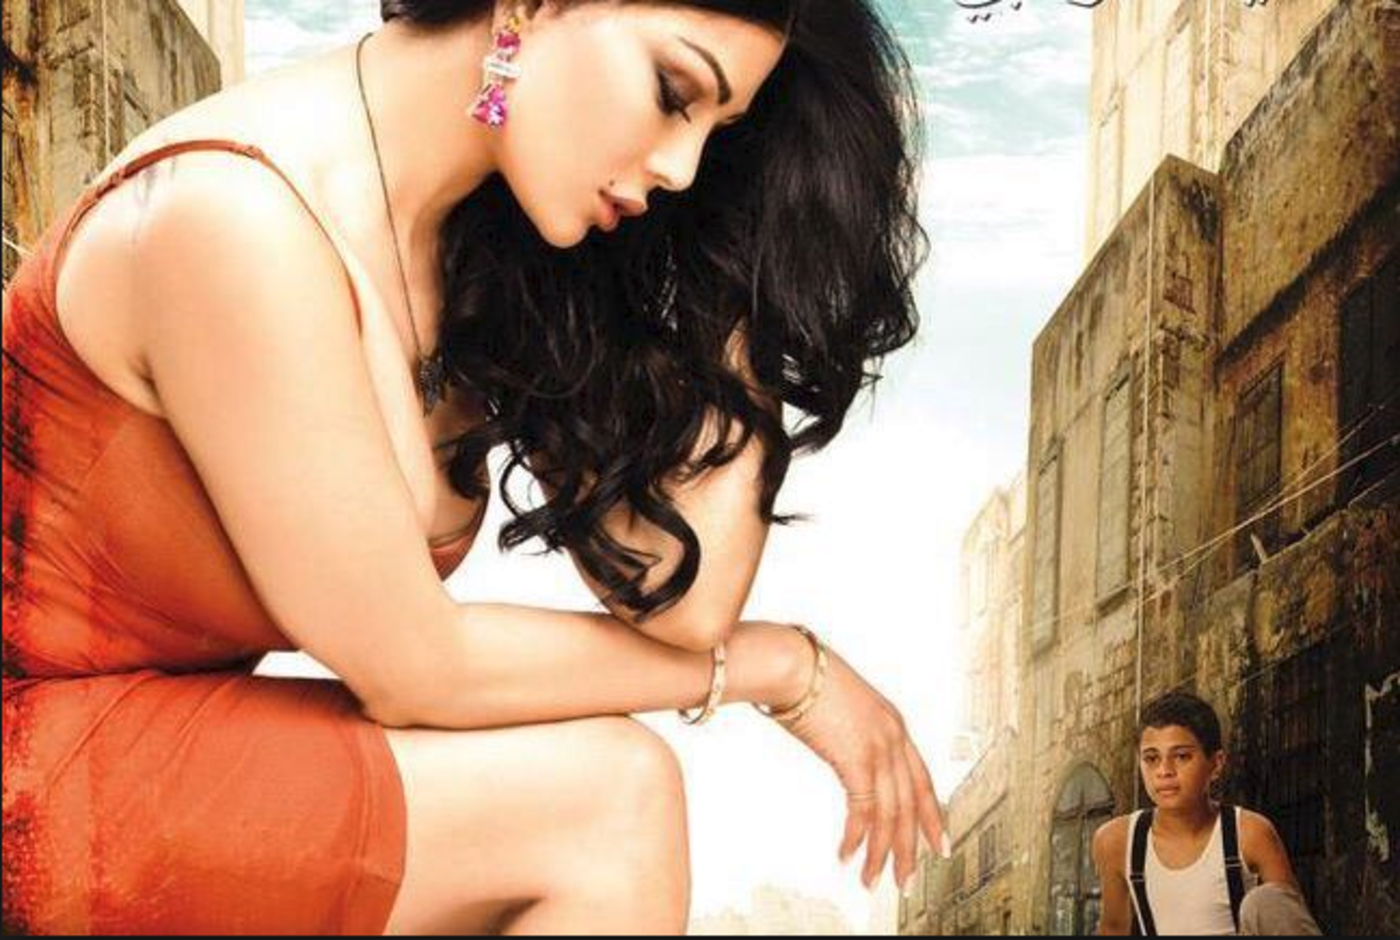 Xxx Girl Video Balatkar - Lebanese star's movie pulled from Egyptian screens | Middle East Eye